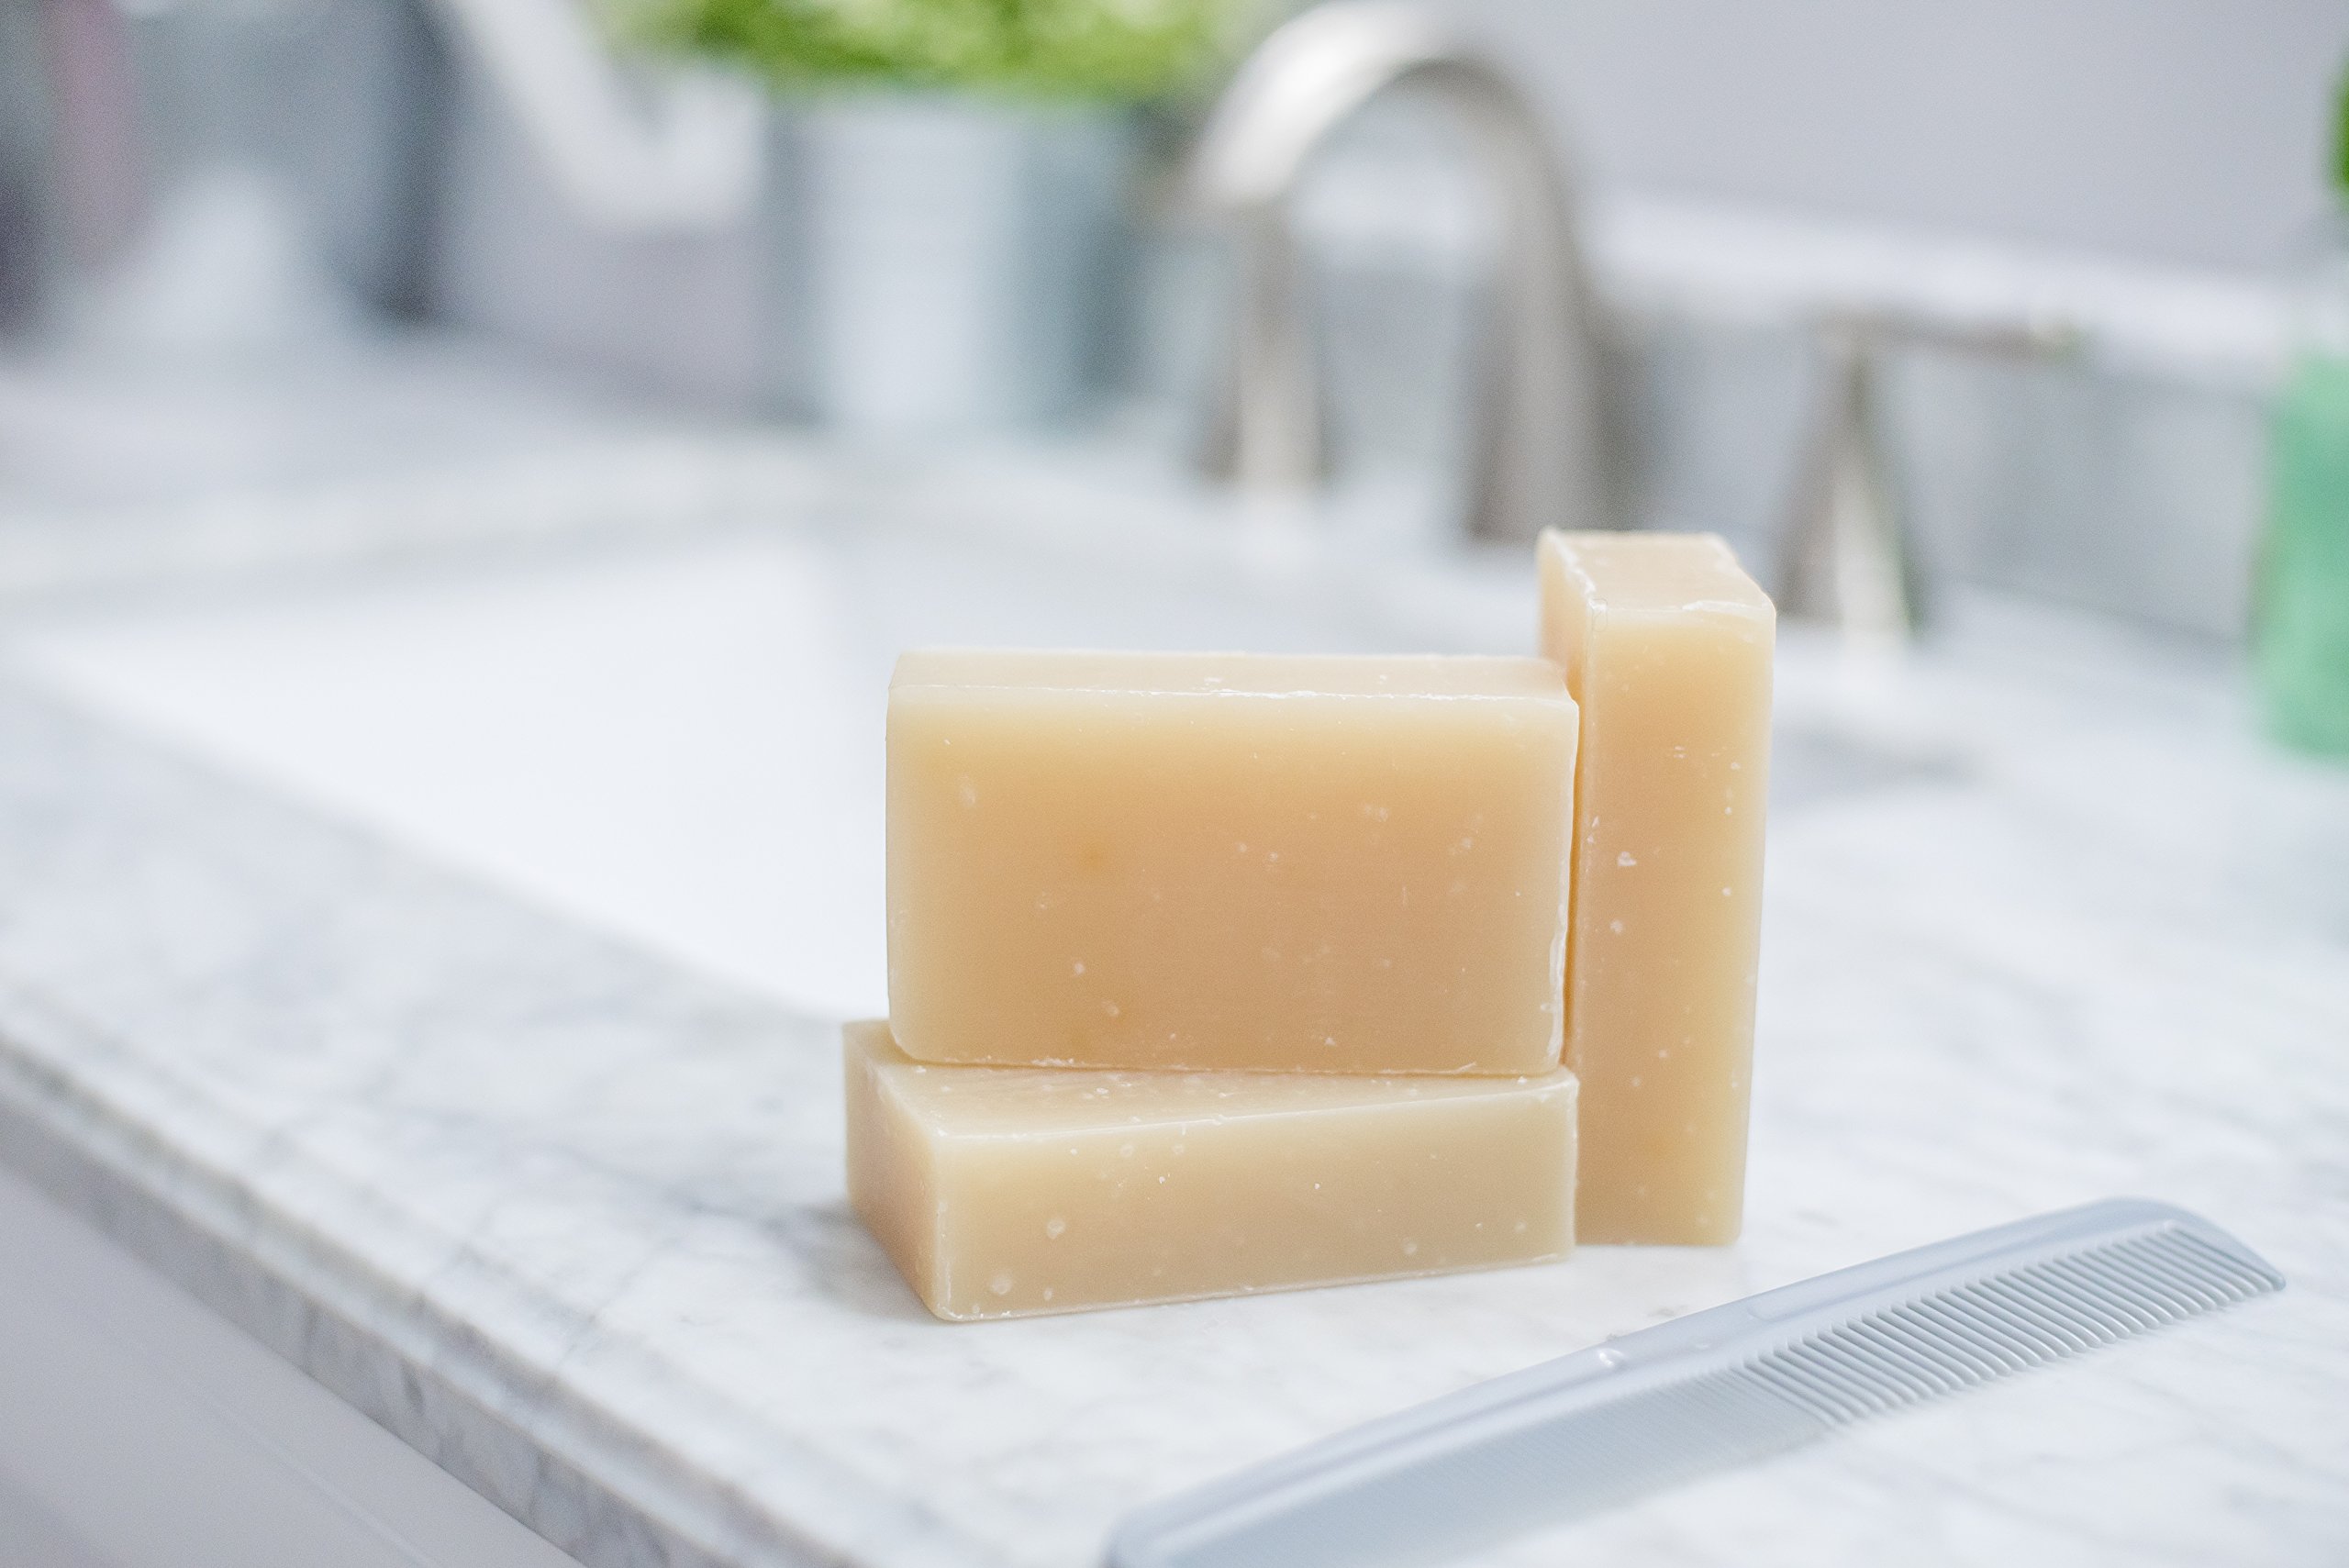 360Feel Lavender Shampoo Bar Soap - Vegan & Handmade - Infused with Hair Growth Oils - Prevents Hair Loss & Dandruff - TSA Approved for Travel - Gentle & Mild for All Hair Types